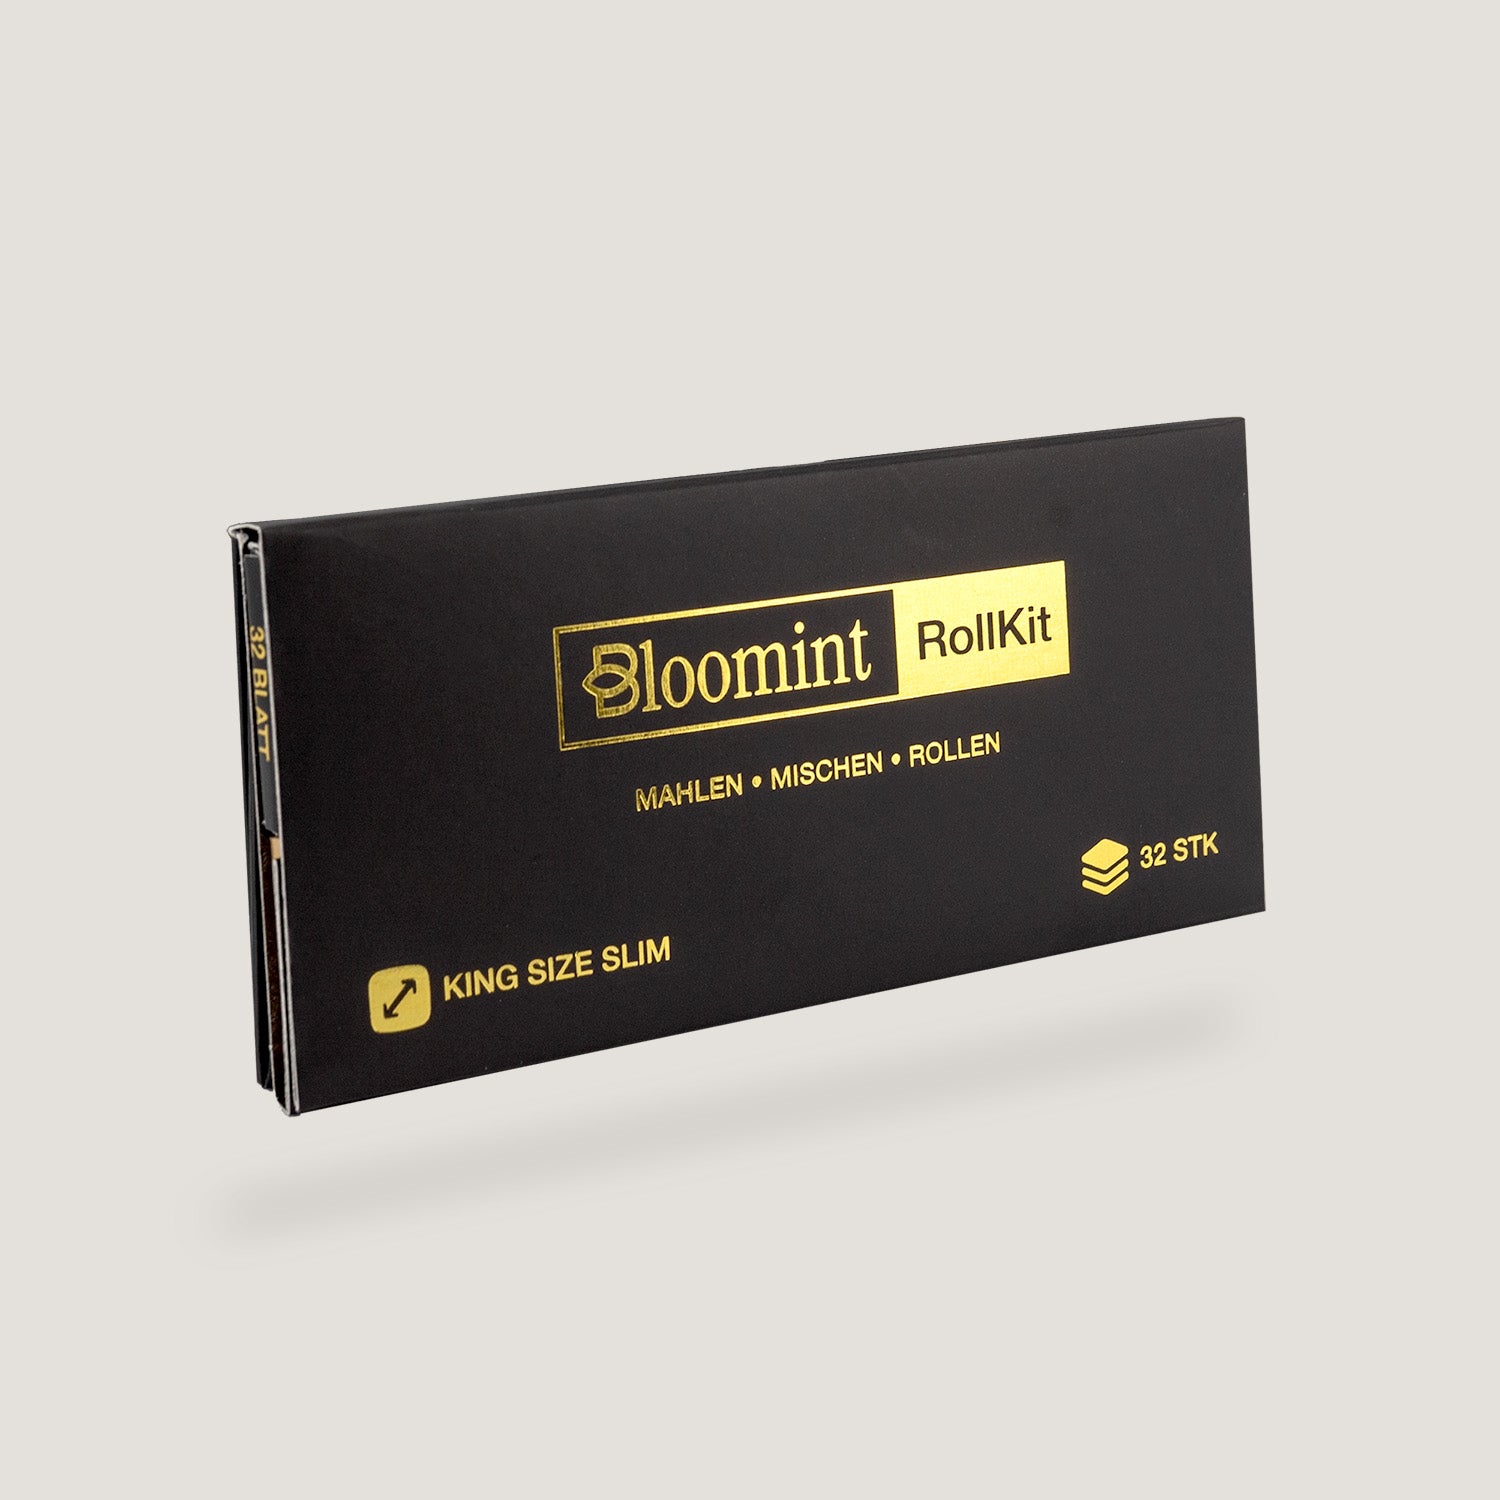 Bloomint RollKits